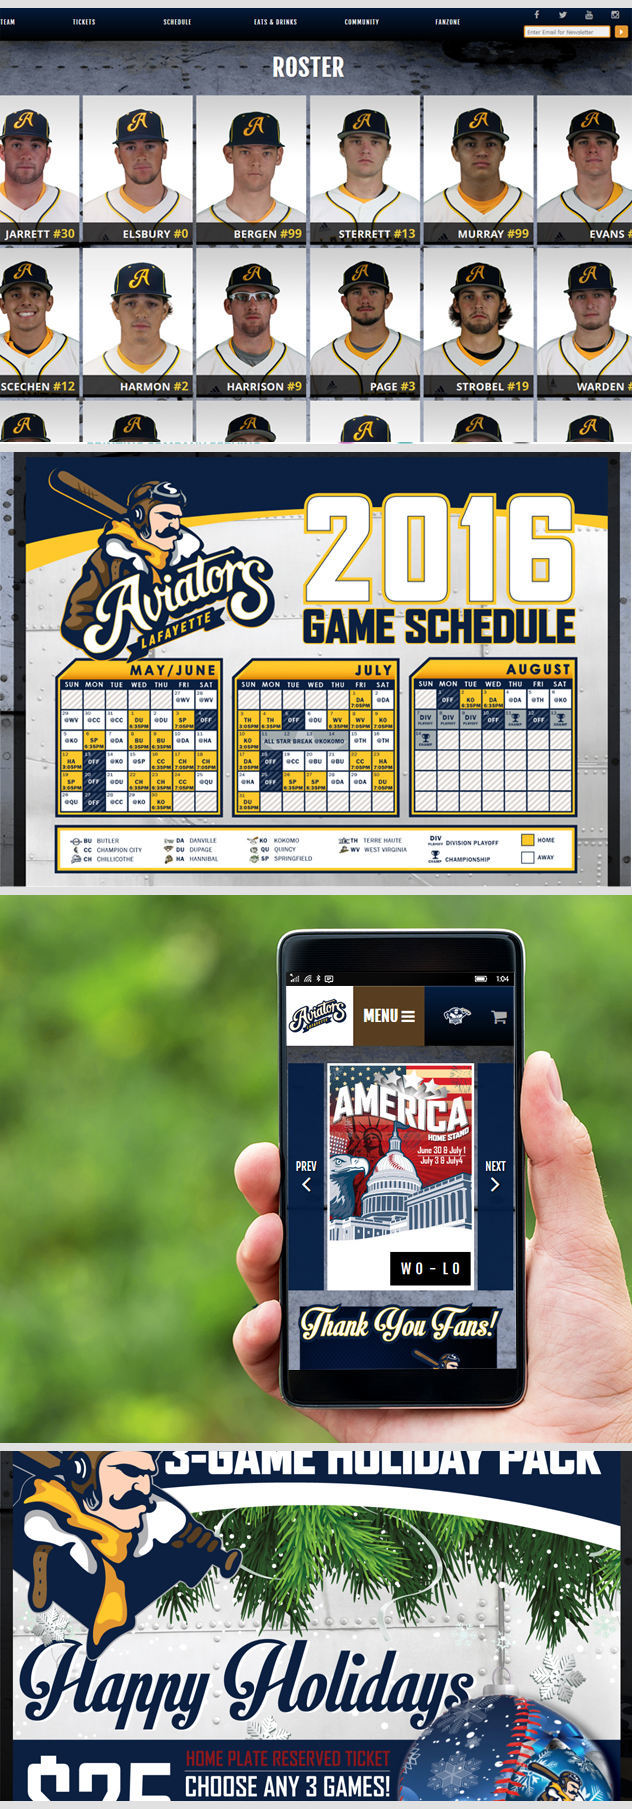 Wisconsin Baseball Team Website Design